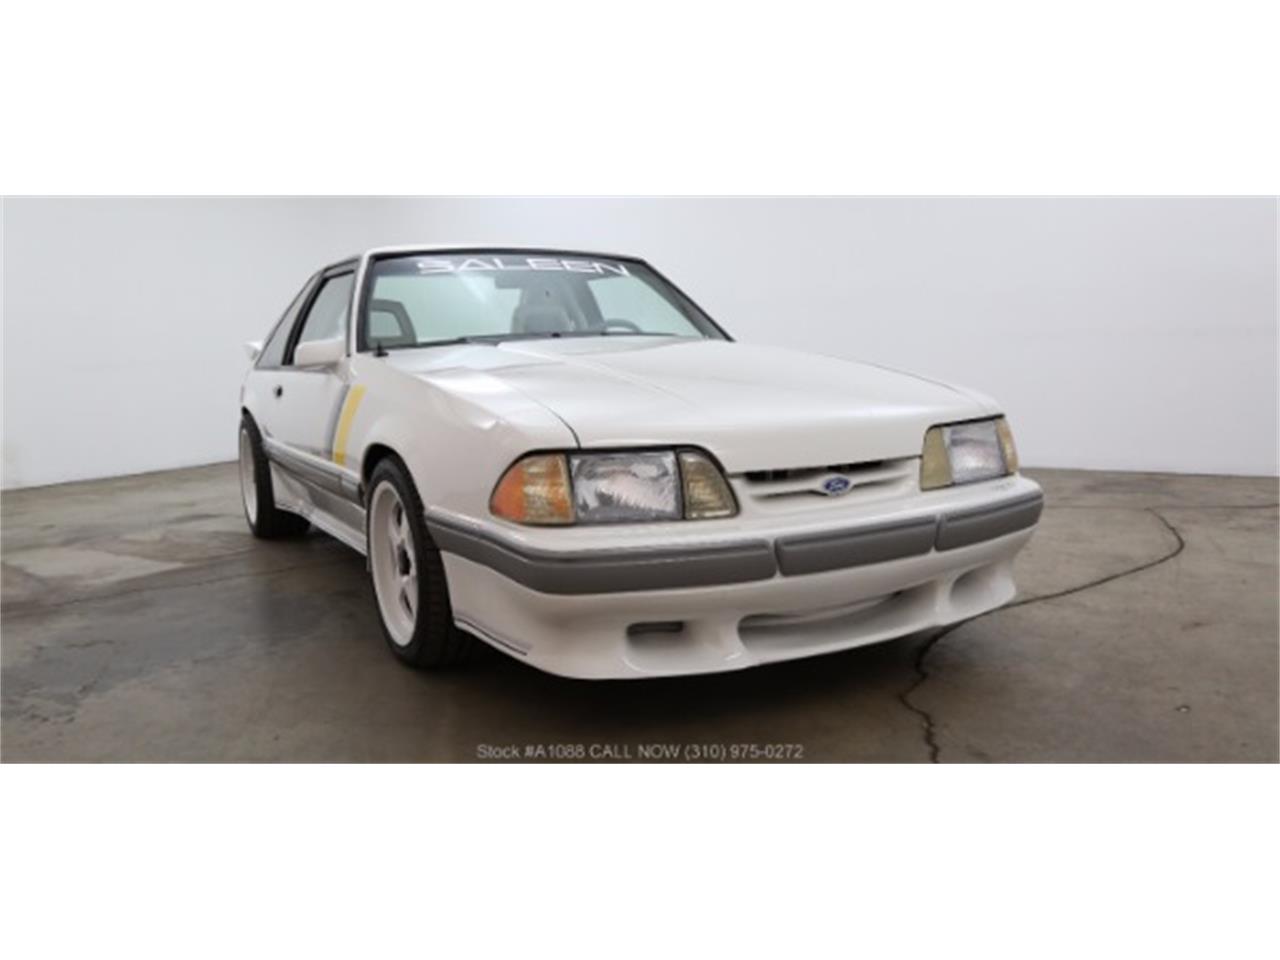 Mustang Saleen 1989 For Sale